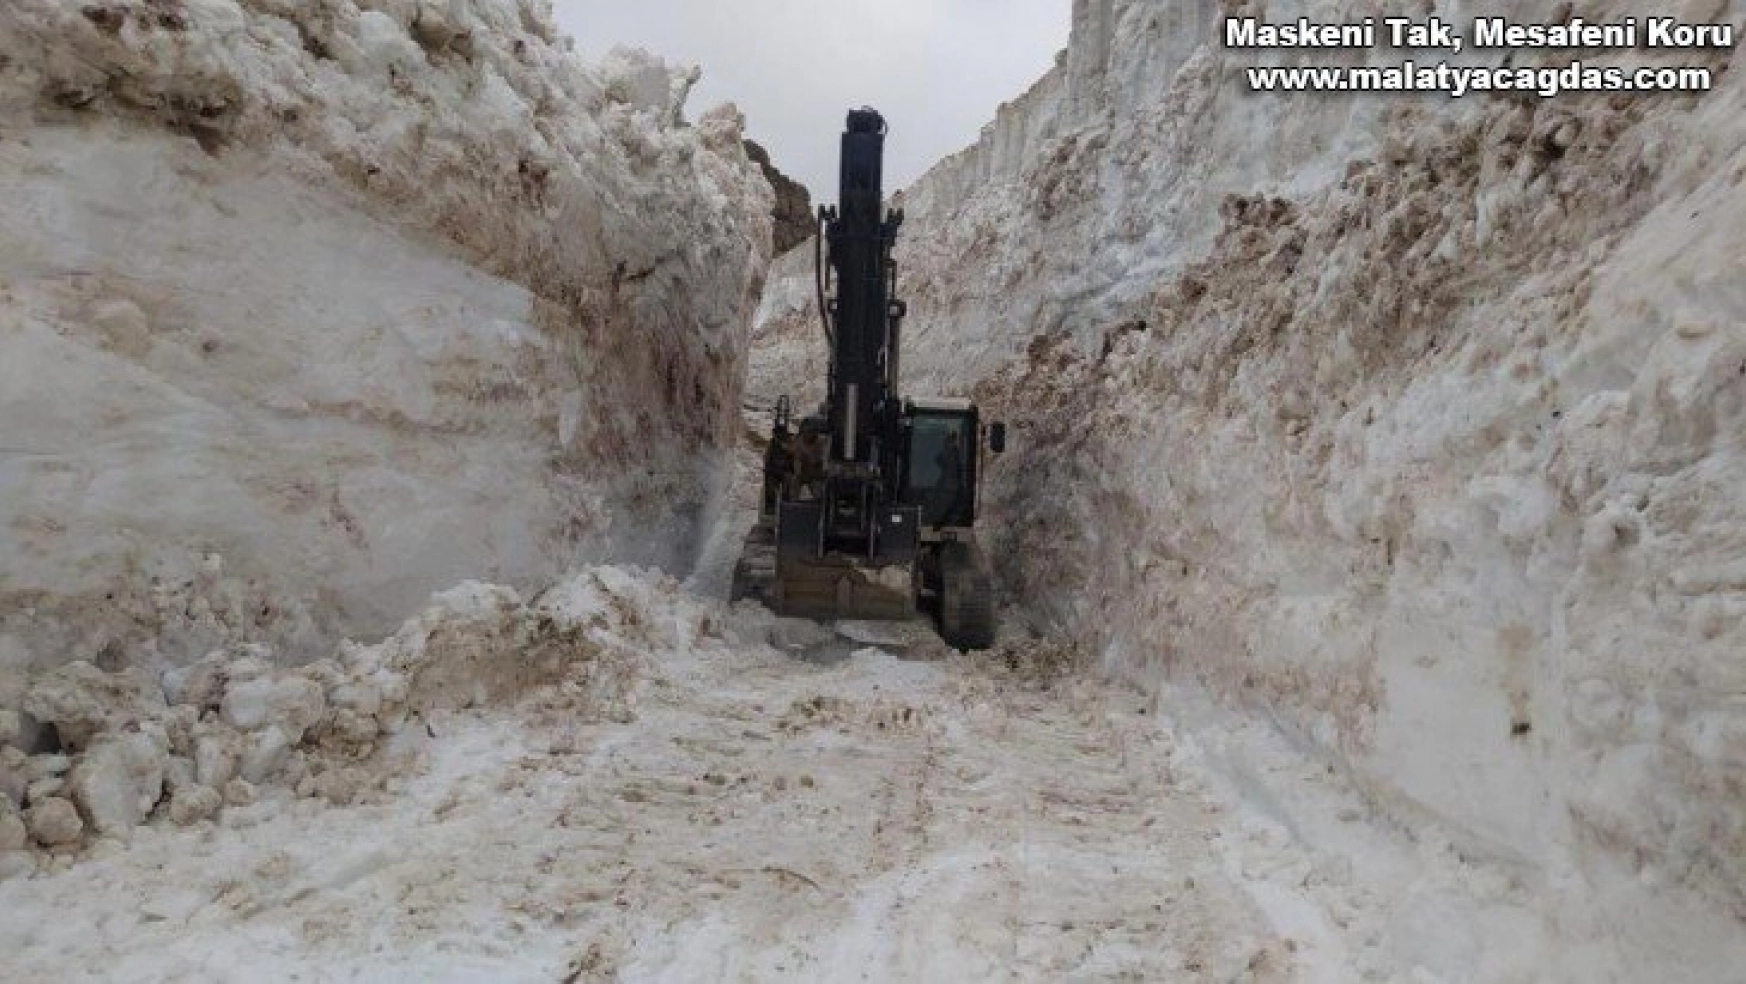 Hakkari'de 8 metre karla mücadele